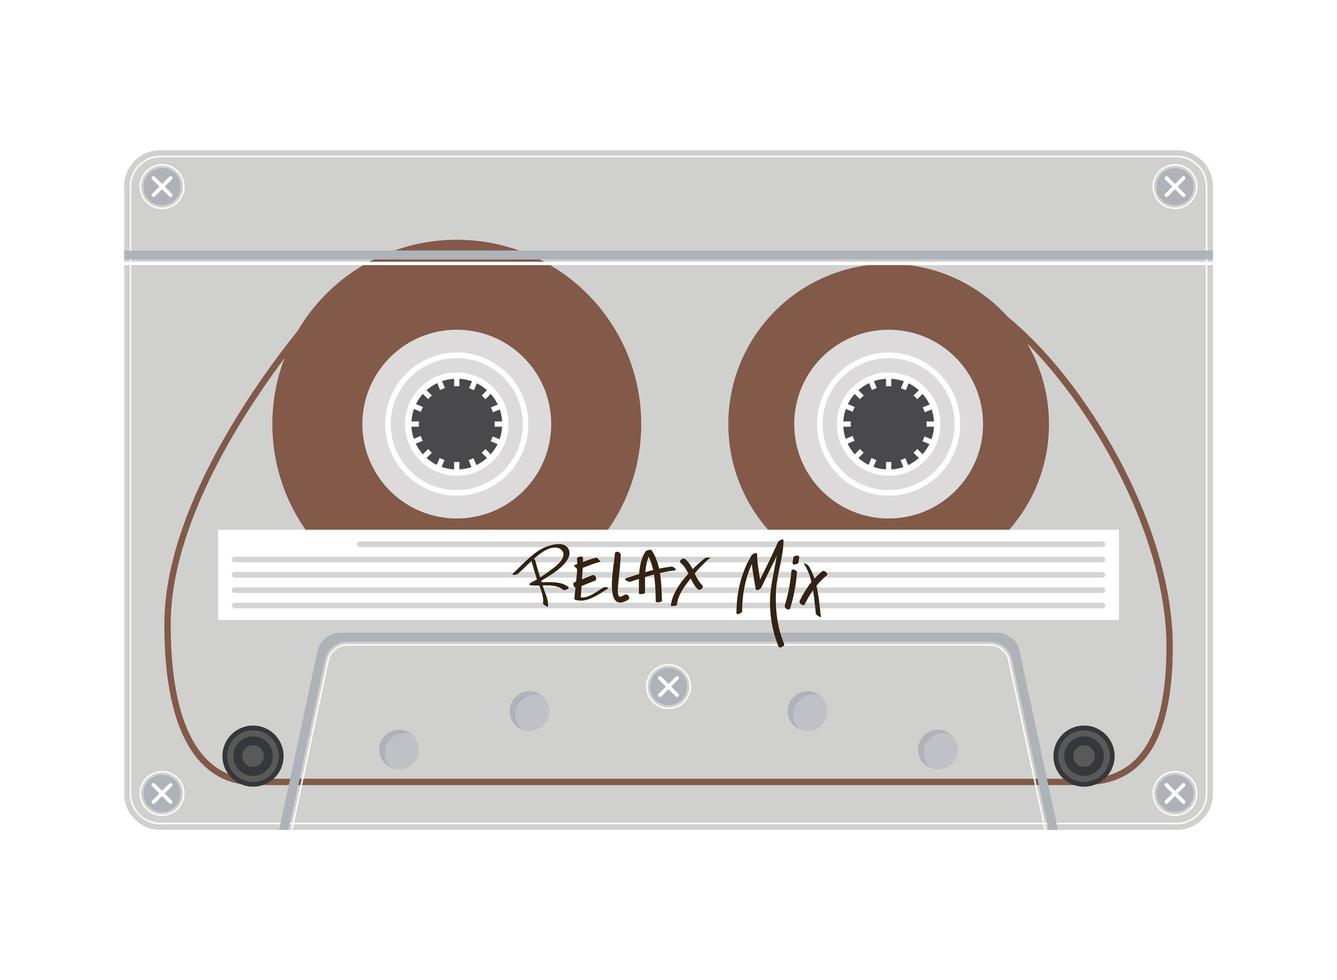 relax mix retro cassette vector design